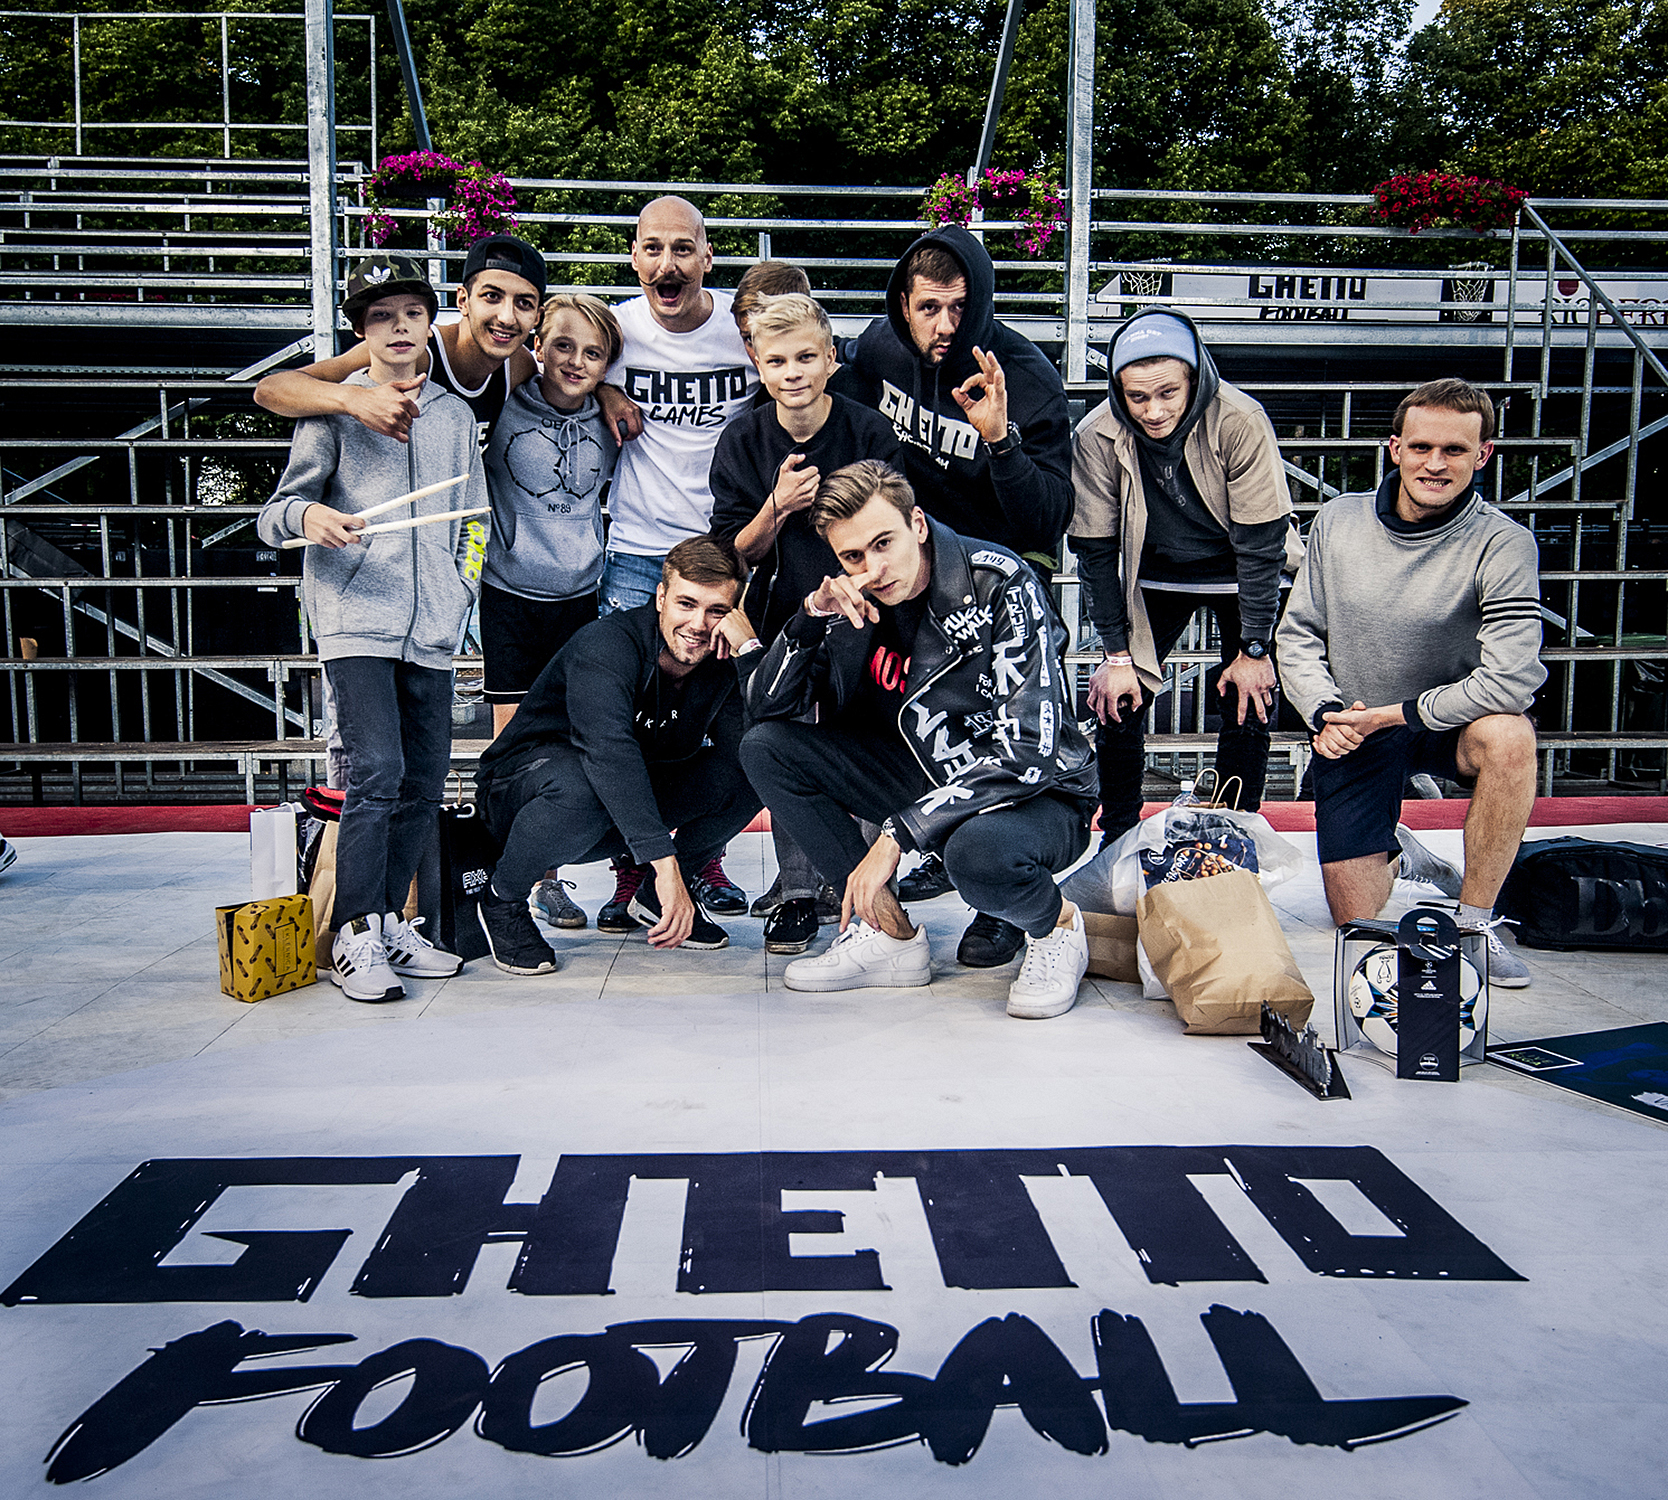 Latvijā pirmajās “Ghetto Football Freestyle” sacensībās triumfē zviedrs Olofsons